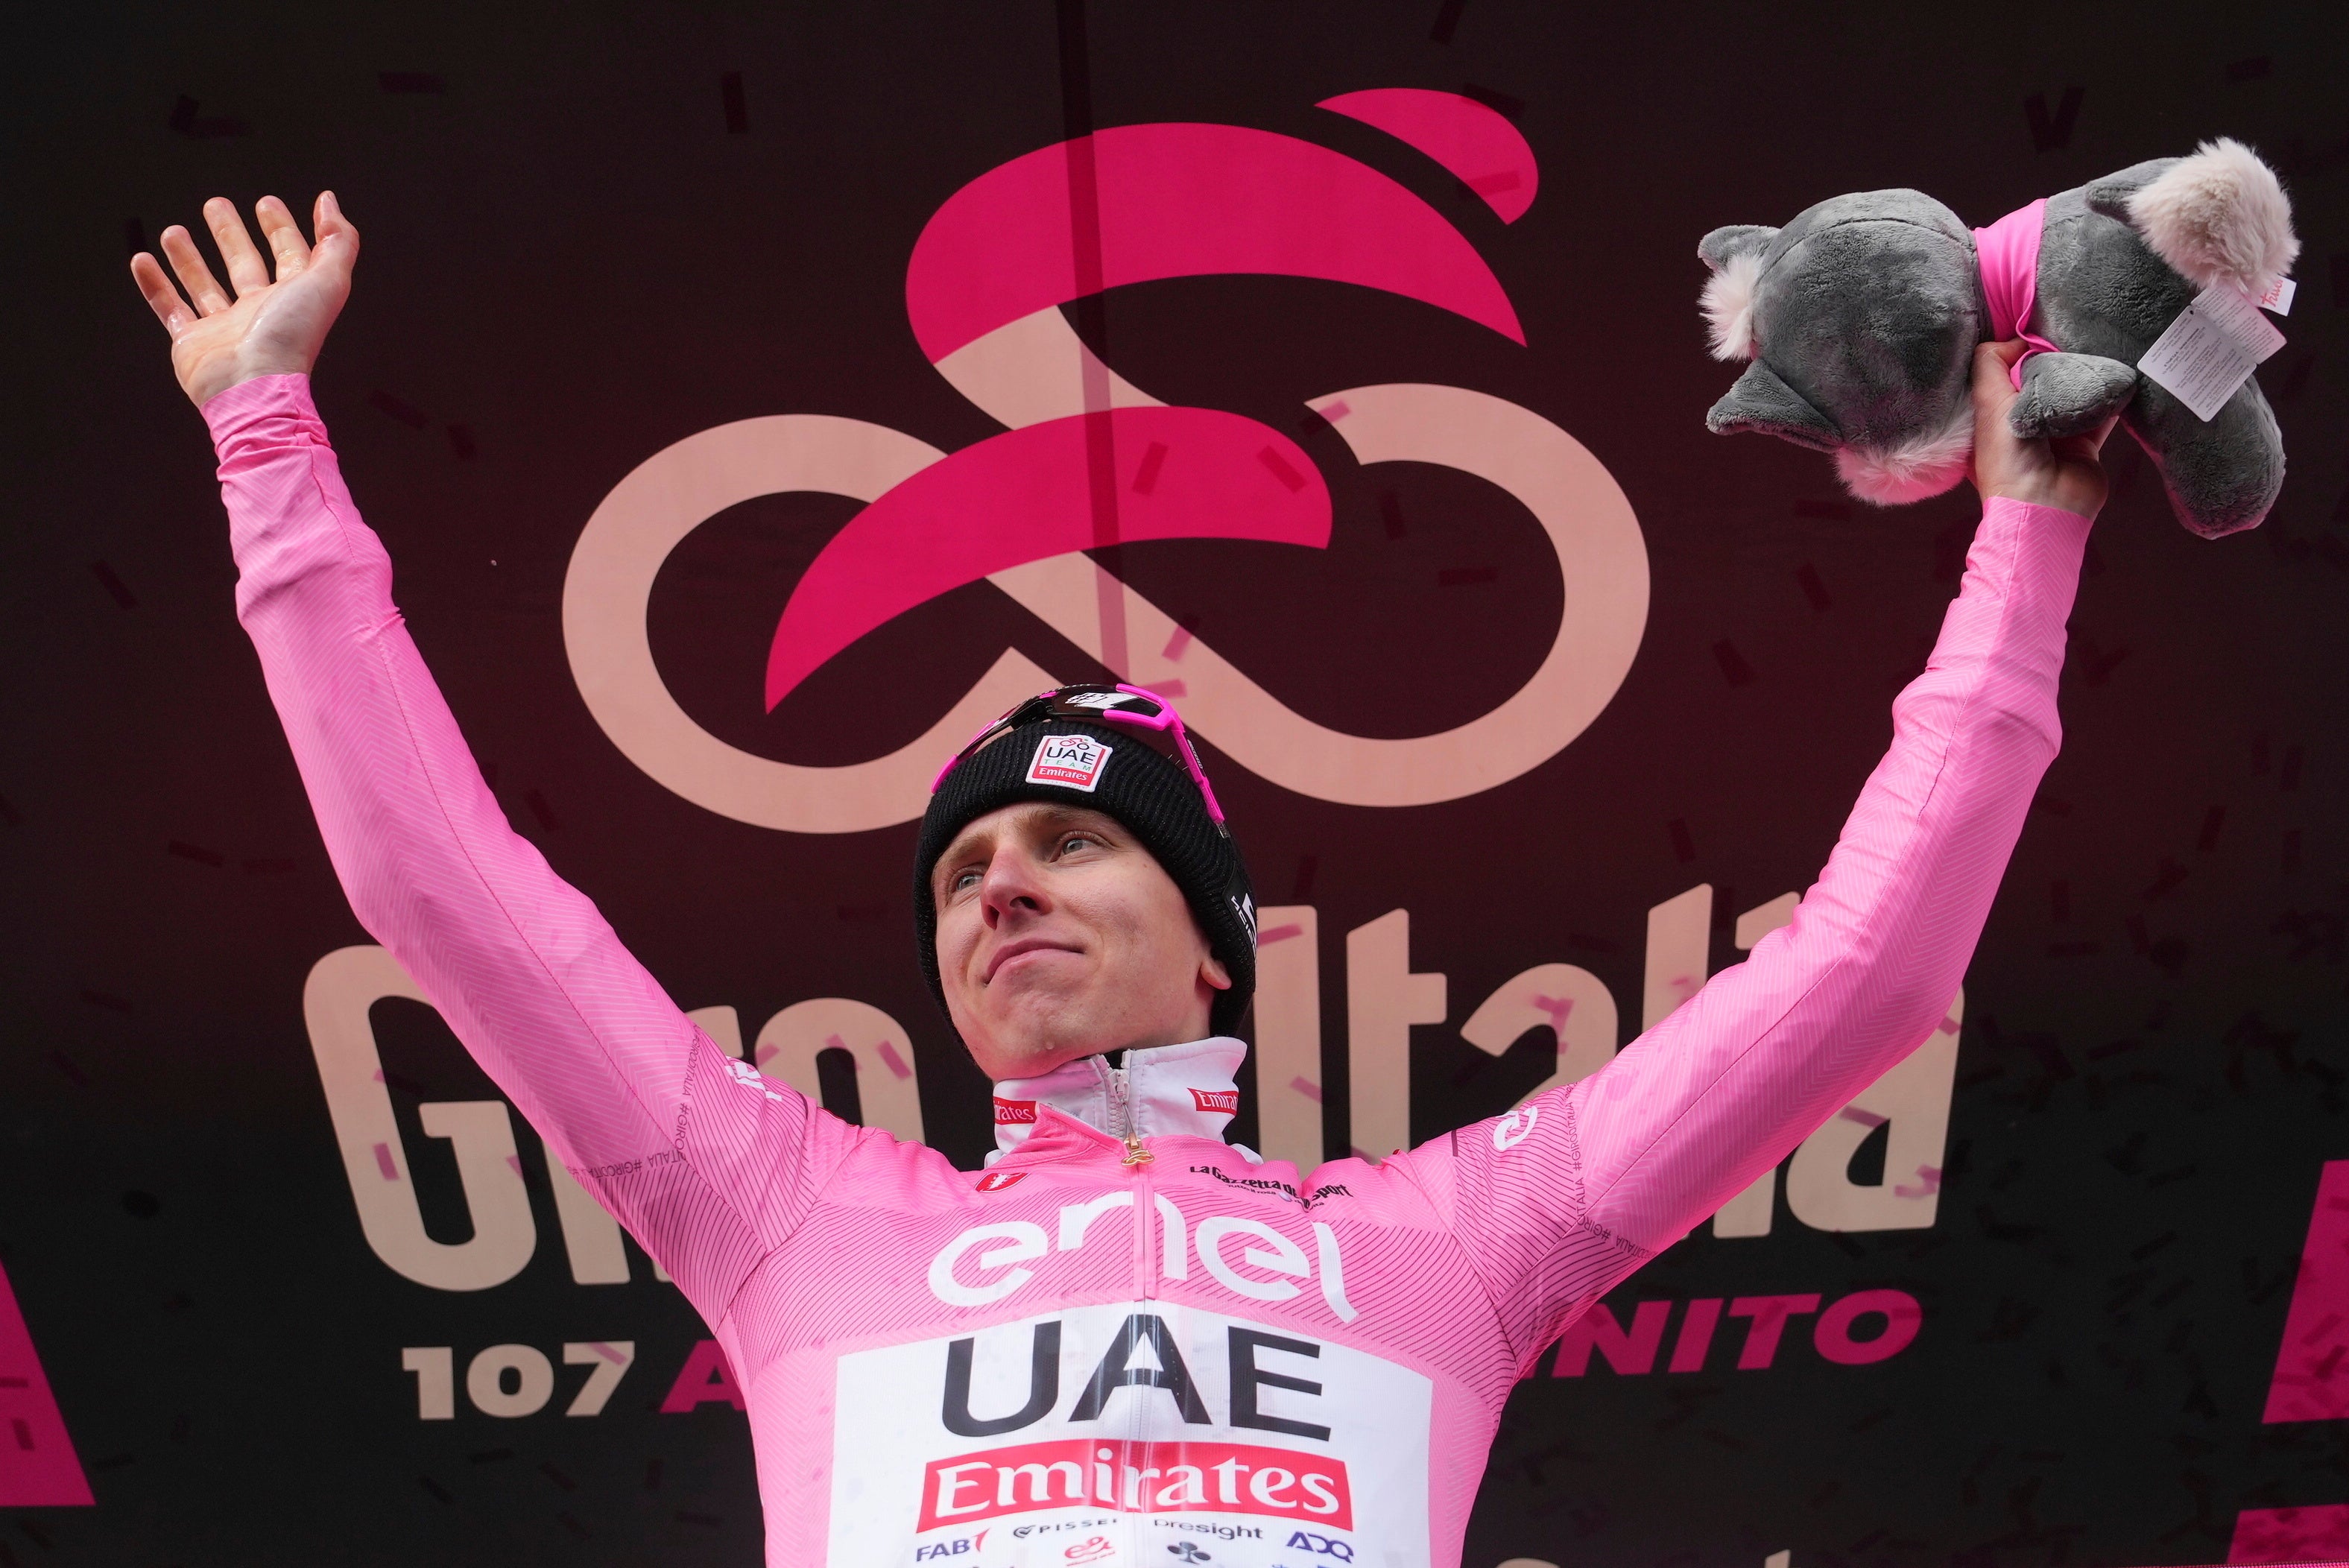 Tadej Pogacar has already won the Giro d’Italia this year